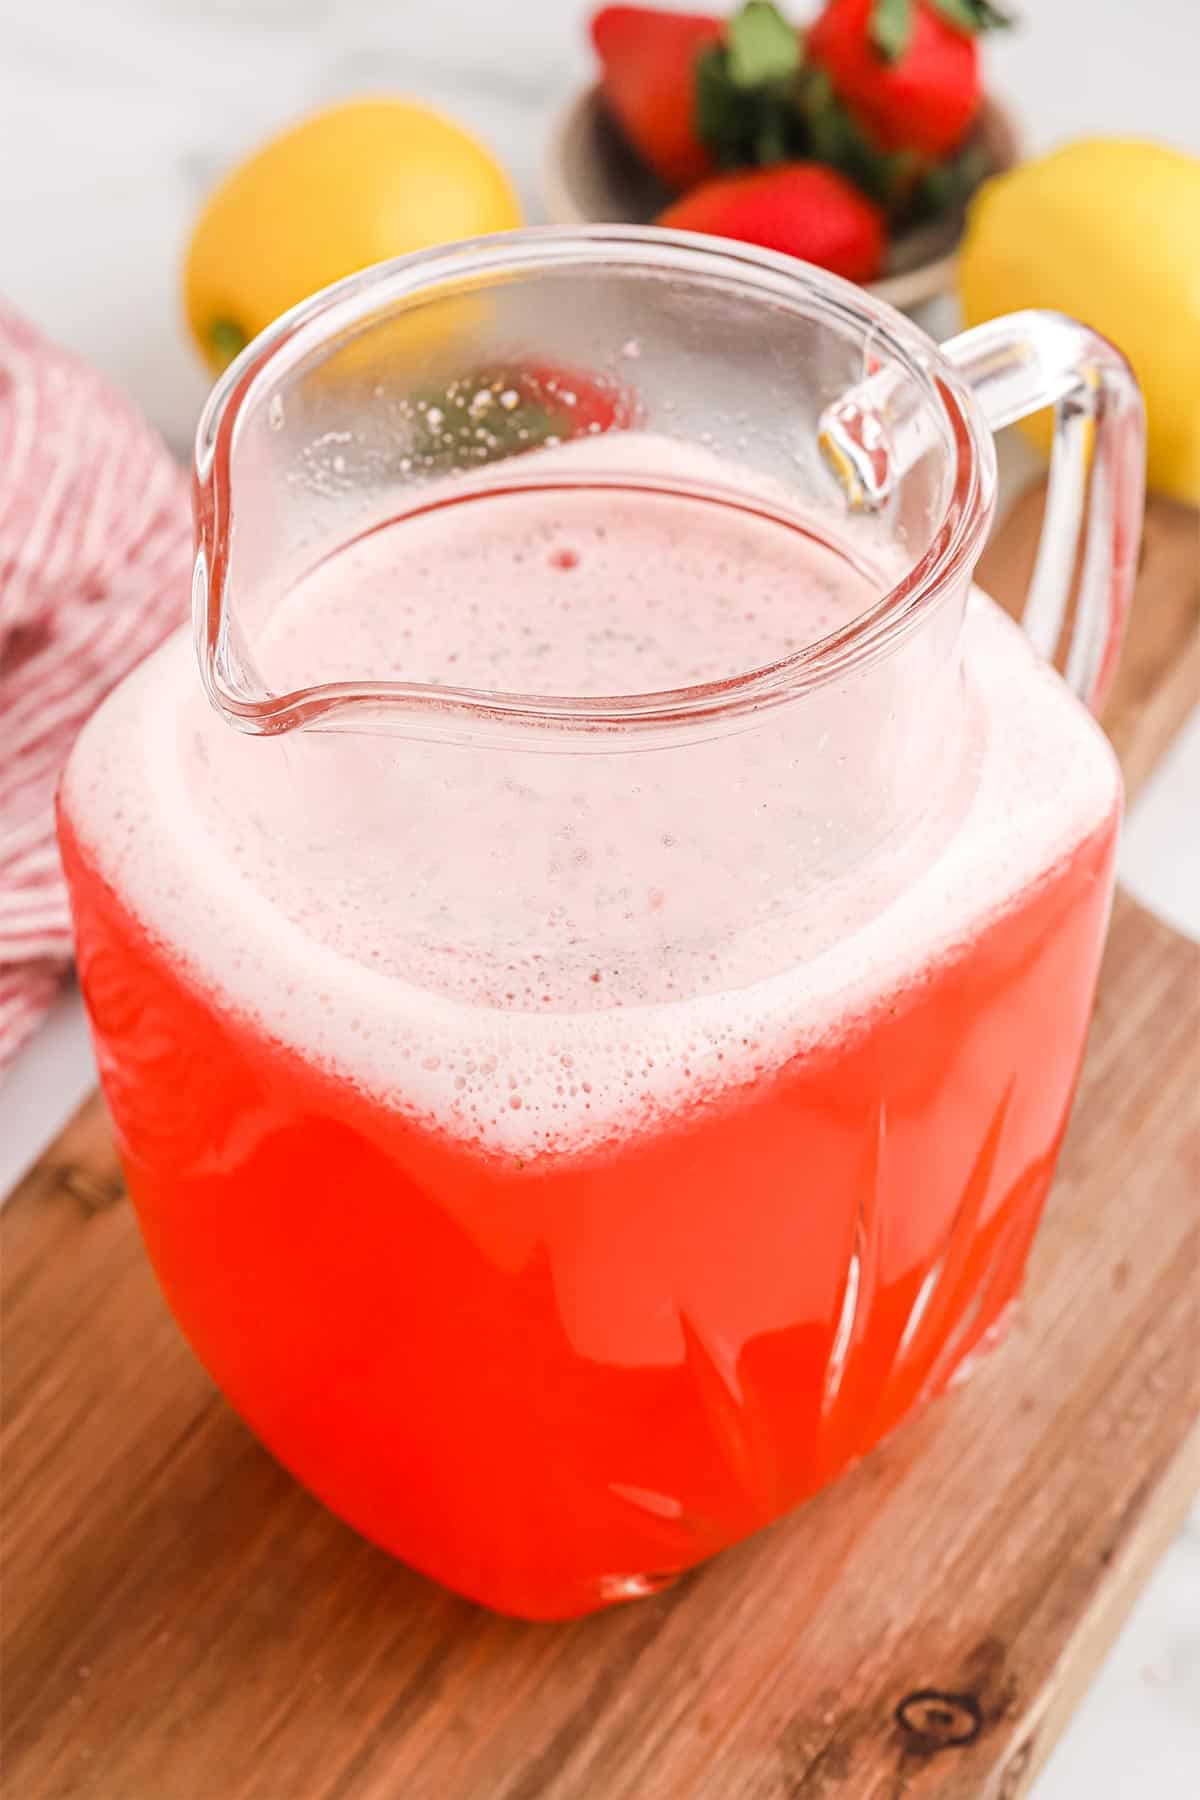 A pitcher of freshly made strawberry lemonade.